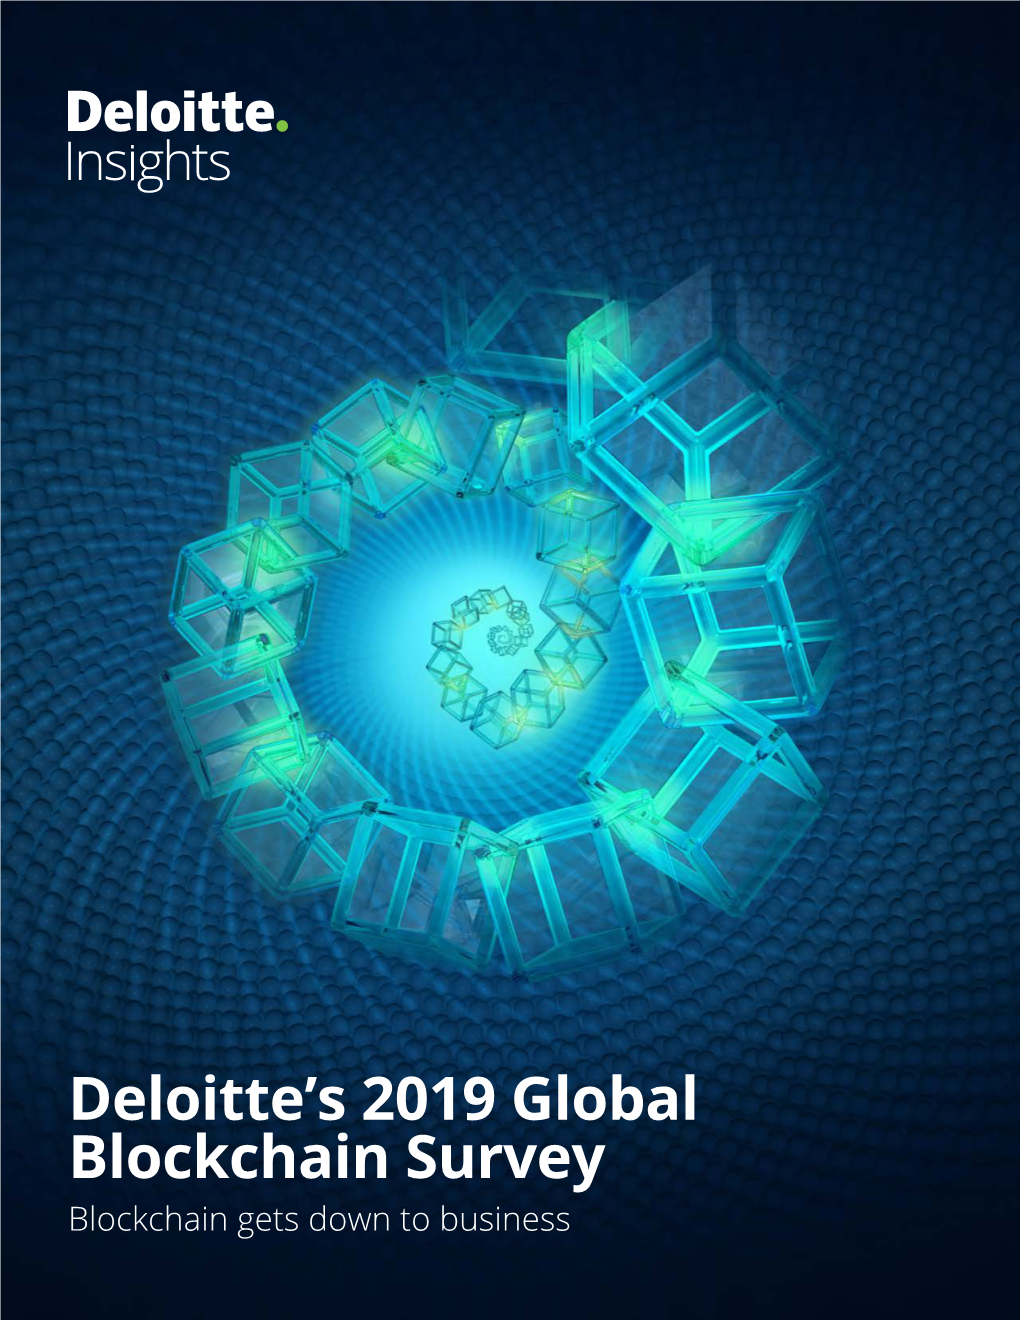 Deloitte's 2019 Global Blockchain Survey